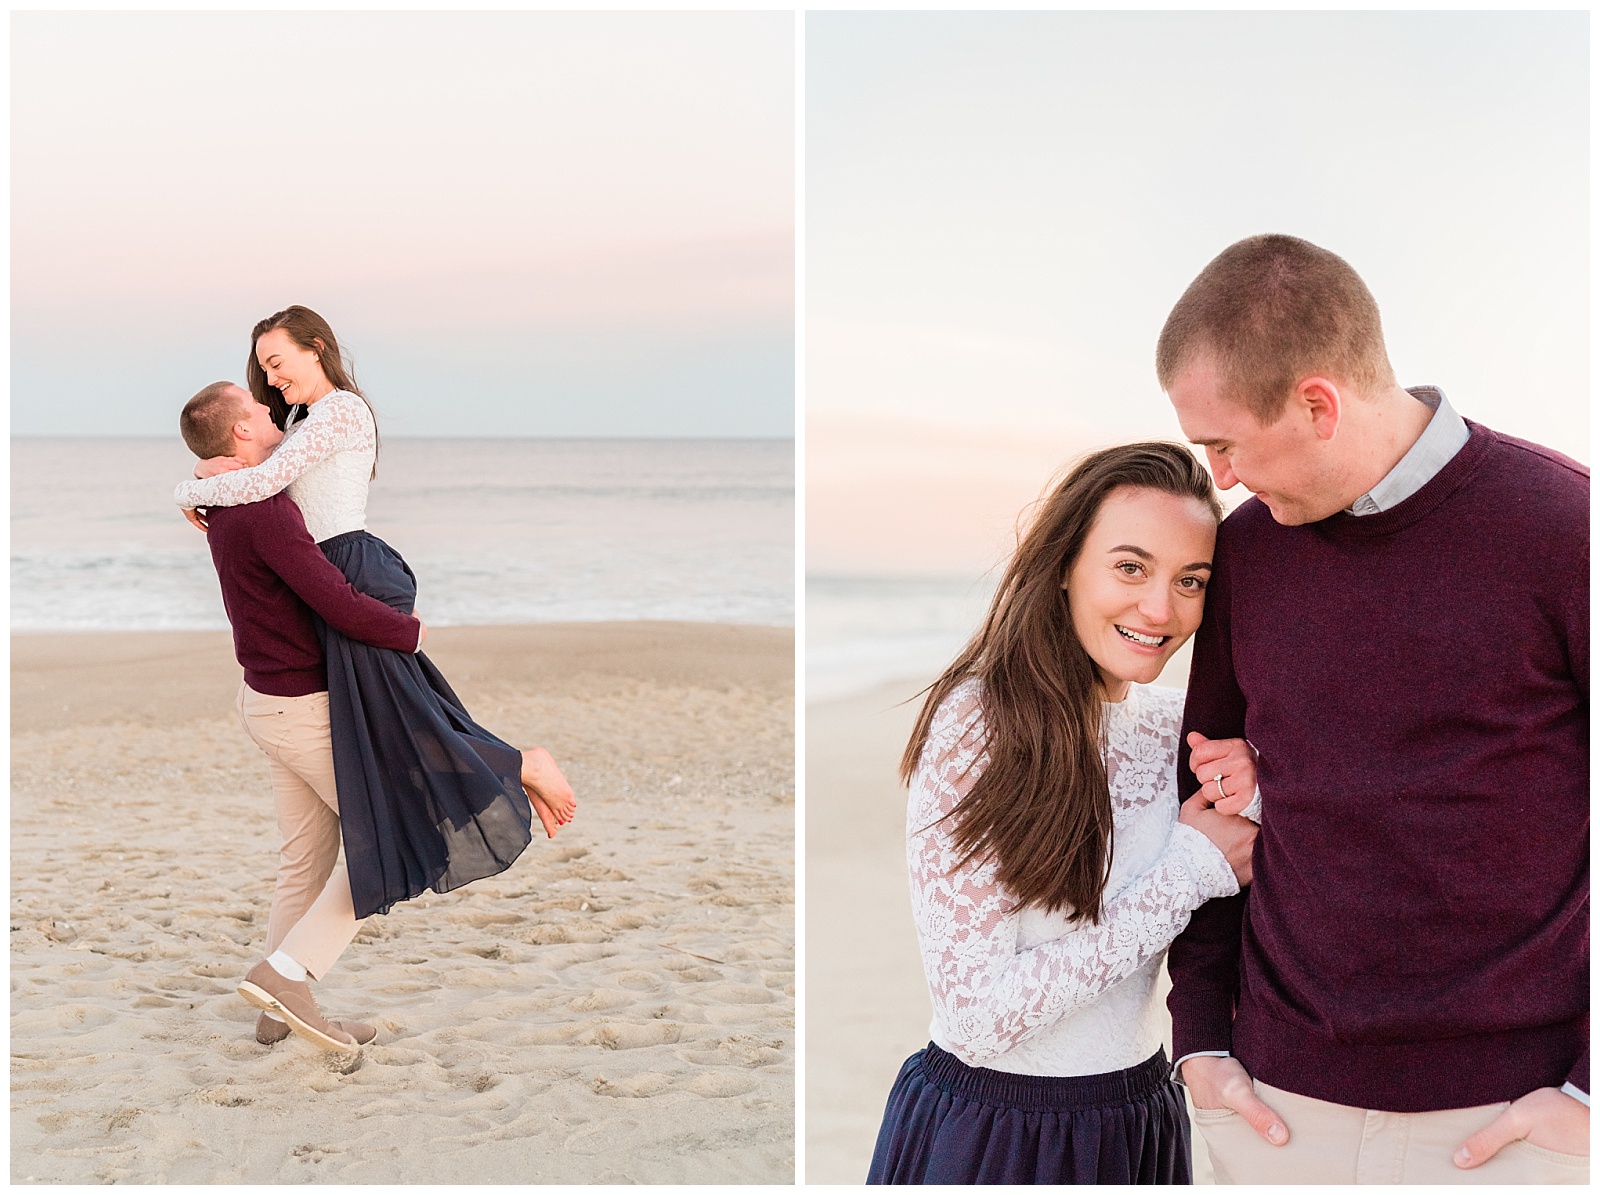 New Jersey, Engagement Session, Wedding Photographer, Beach, Sunset, Shore, Joy, Laughter, Fiance